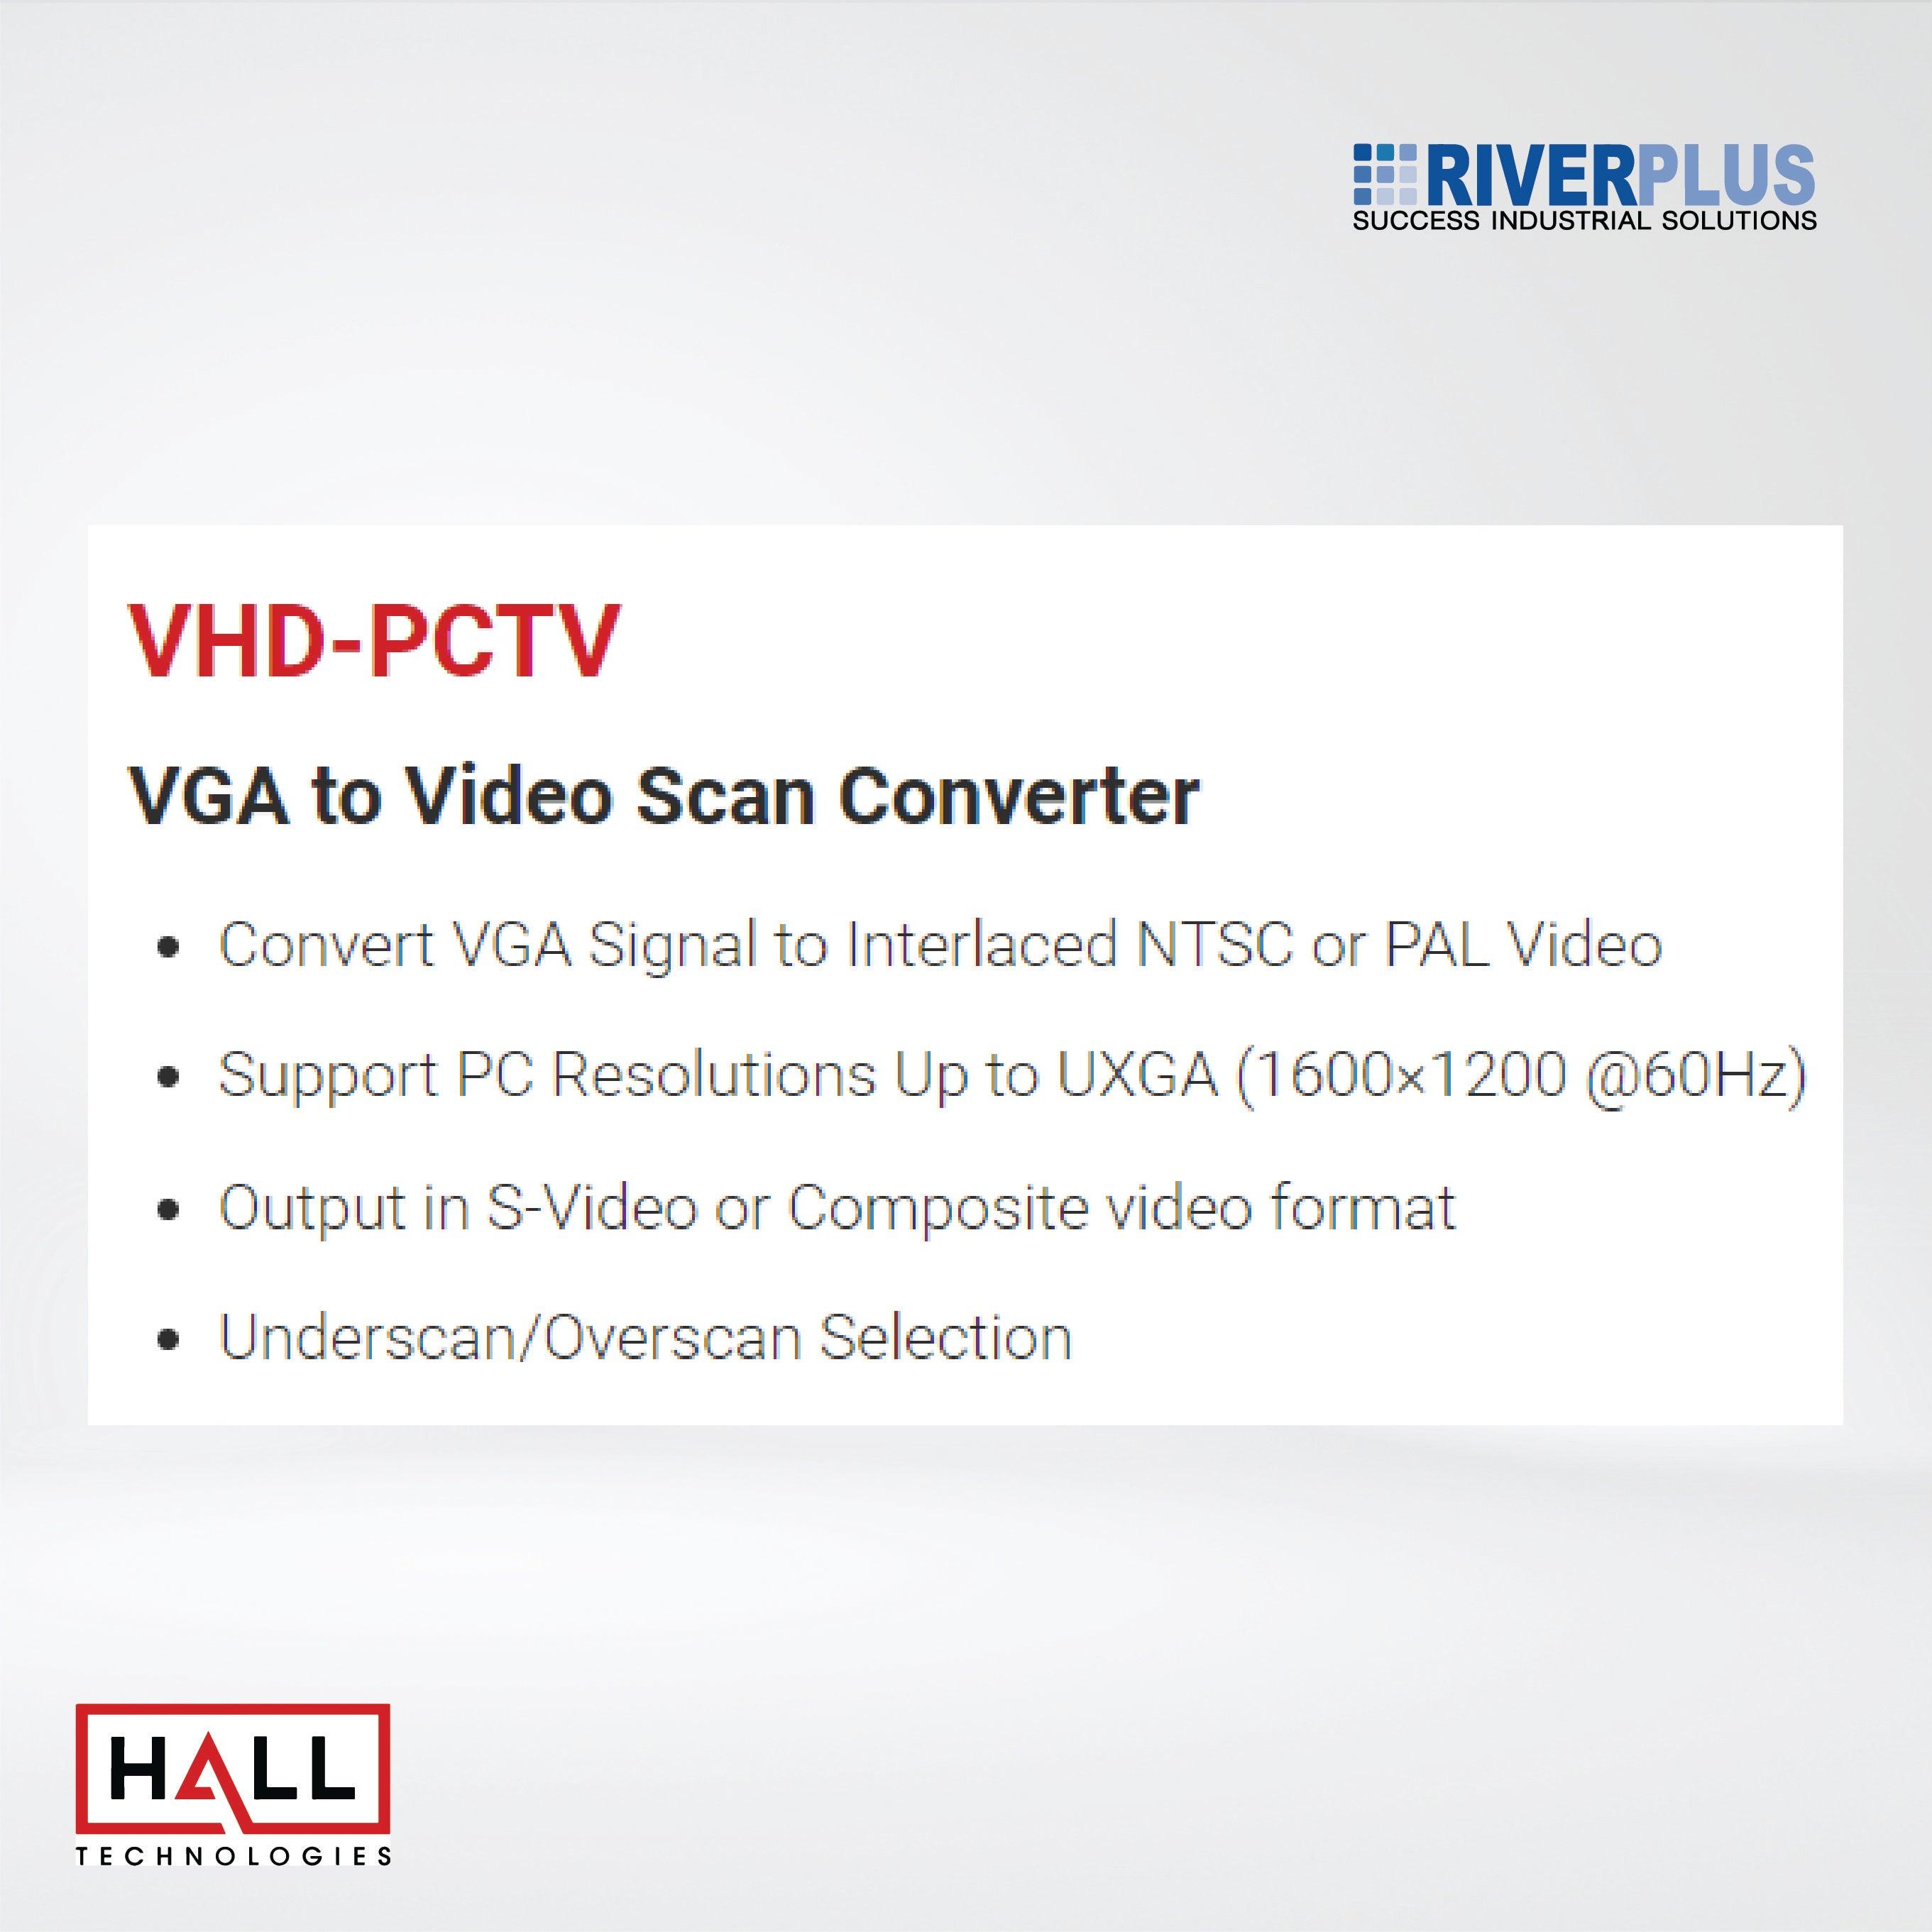 VHD-PCTV VGA to Video Scan Converter - Riverplus